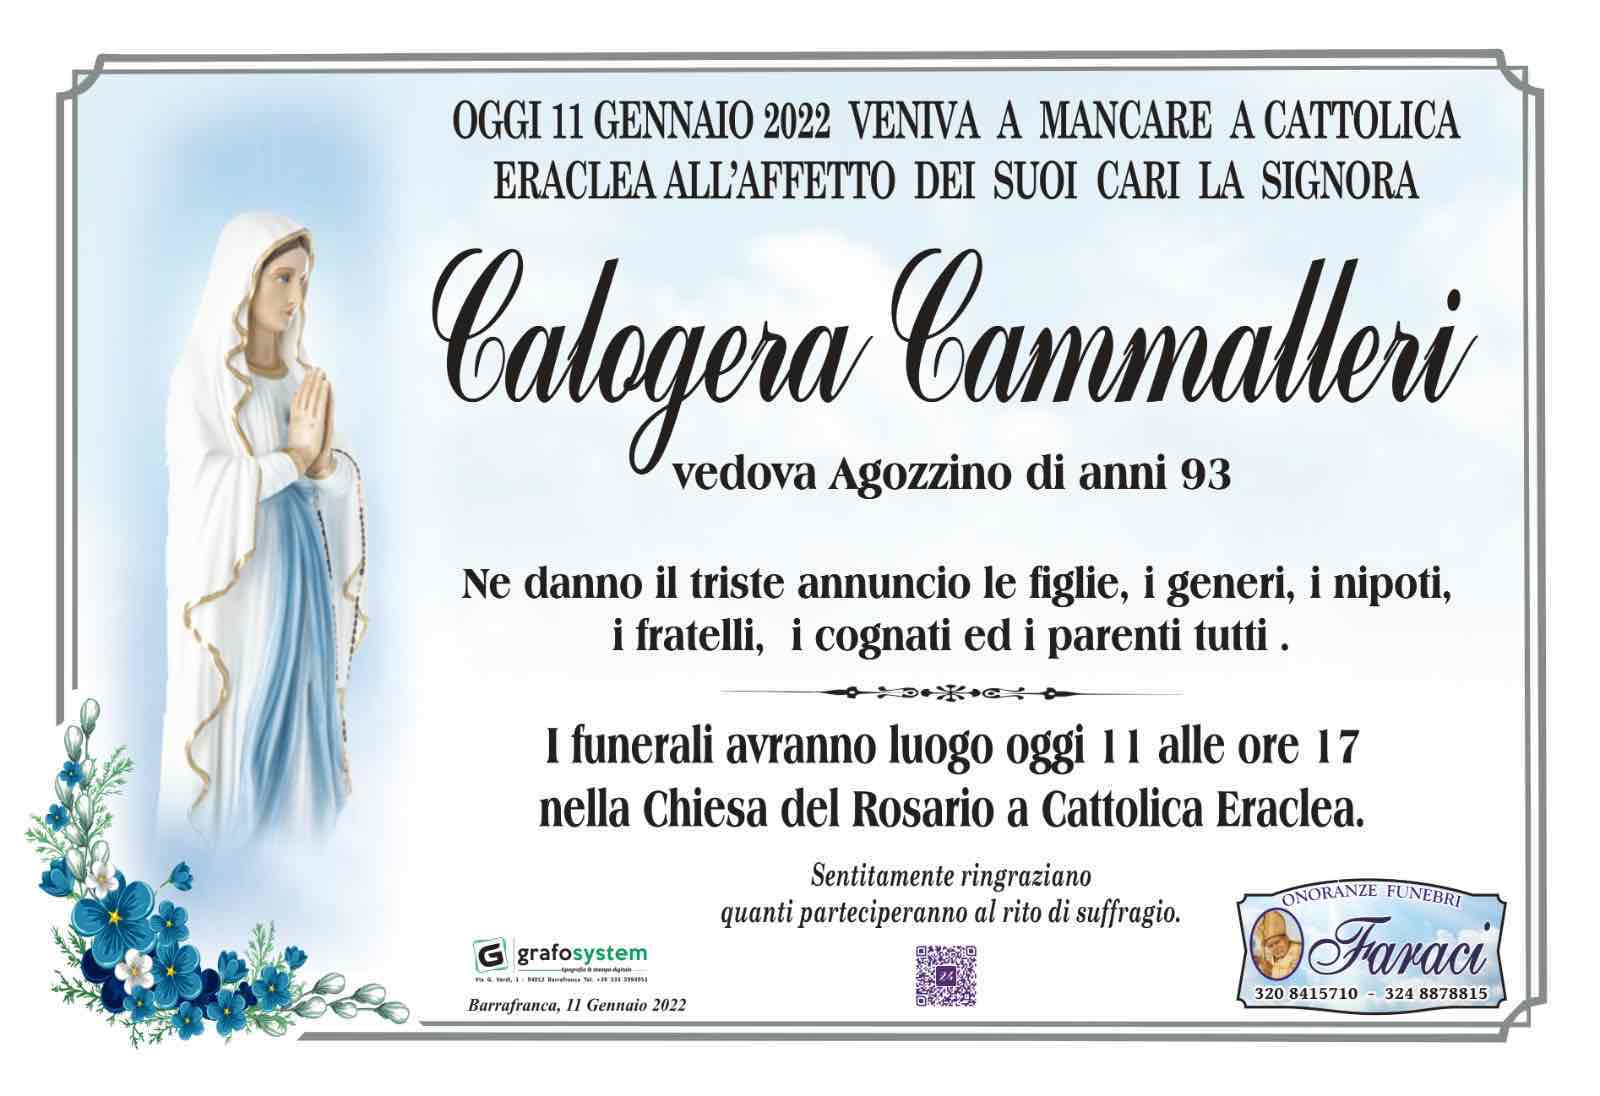 Calogera Cammalleri